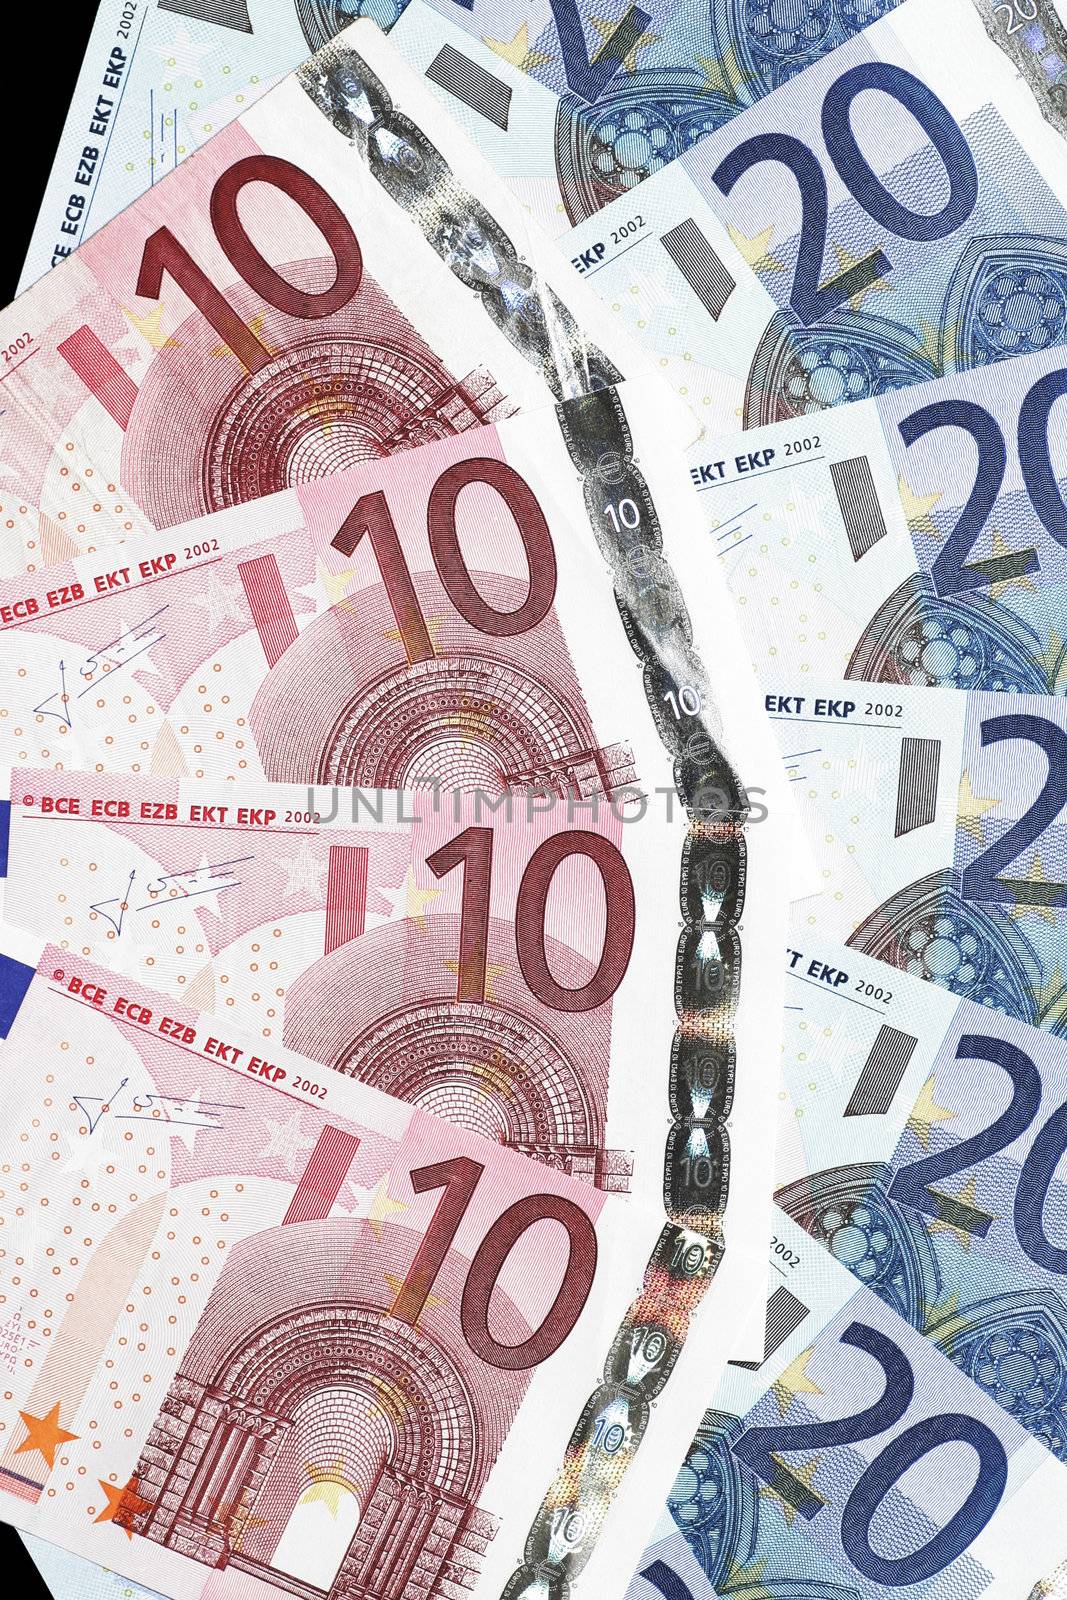 Money - Twenty And Ten Euro Notes by thorsten